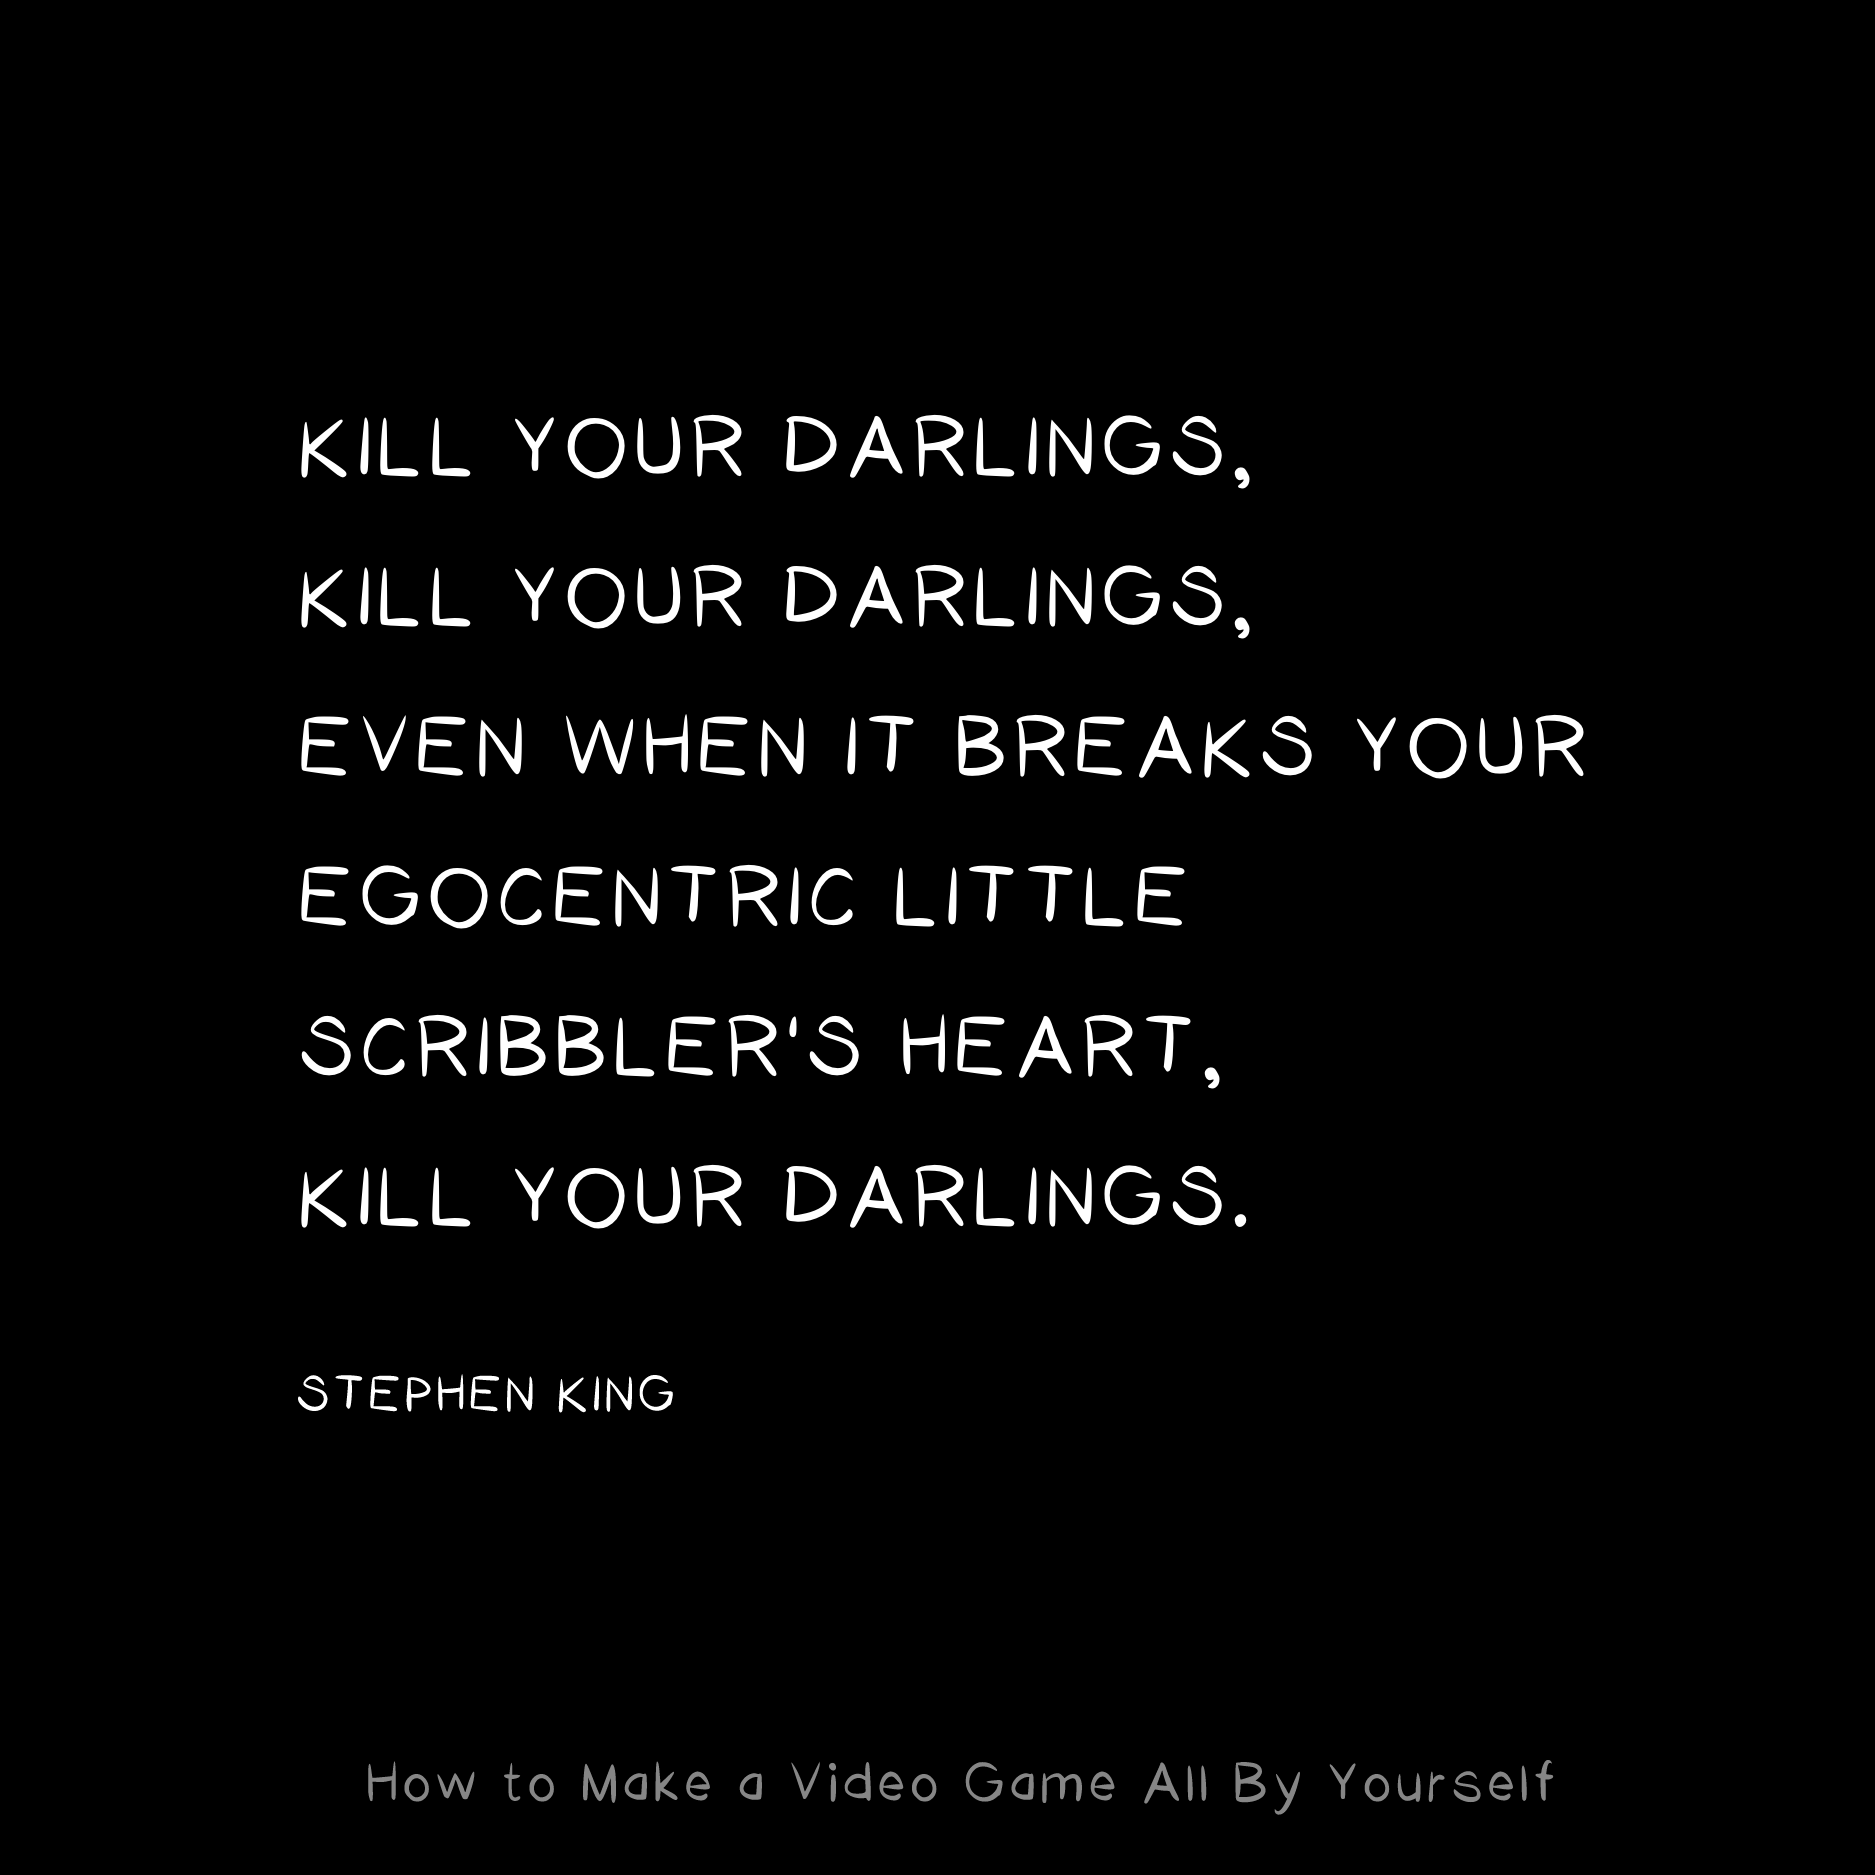 Kill your darlings, kill your darlings, even when it breaks your egocentric little scribbler's heart, kill your darlings.-Stephen King